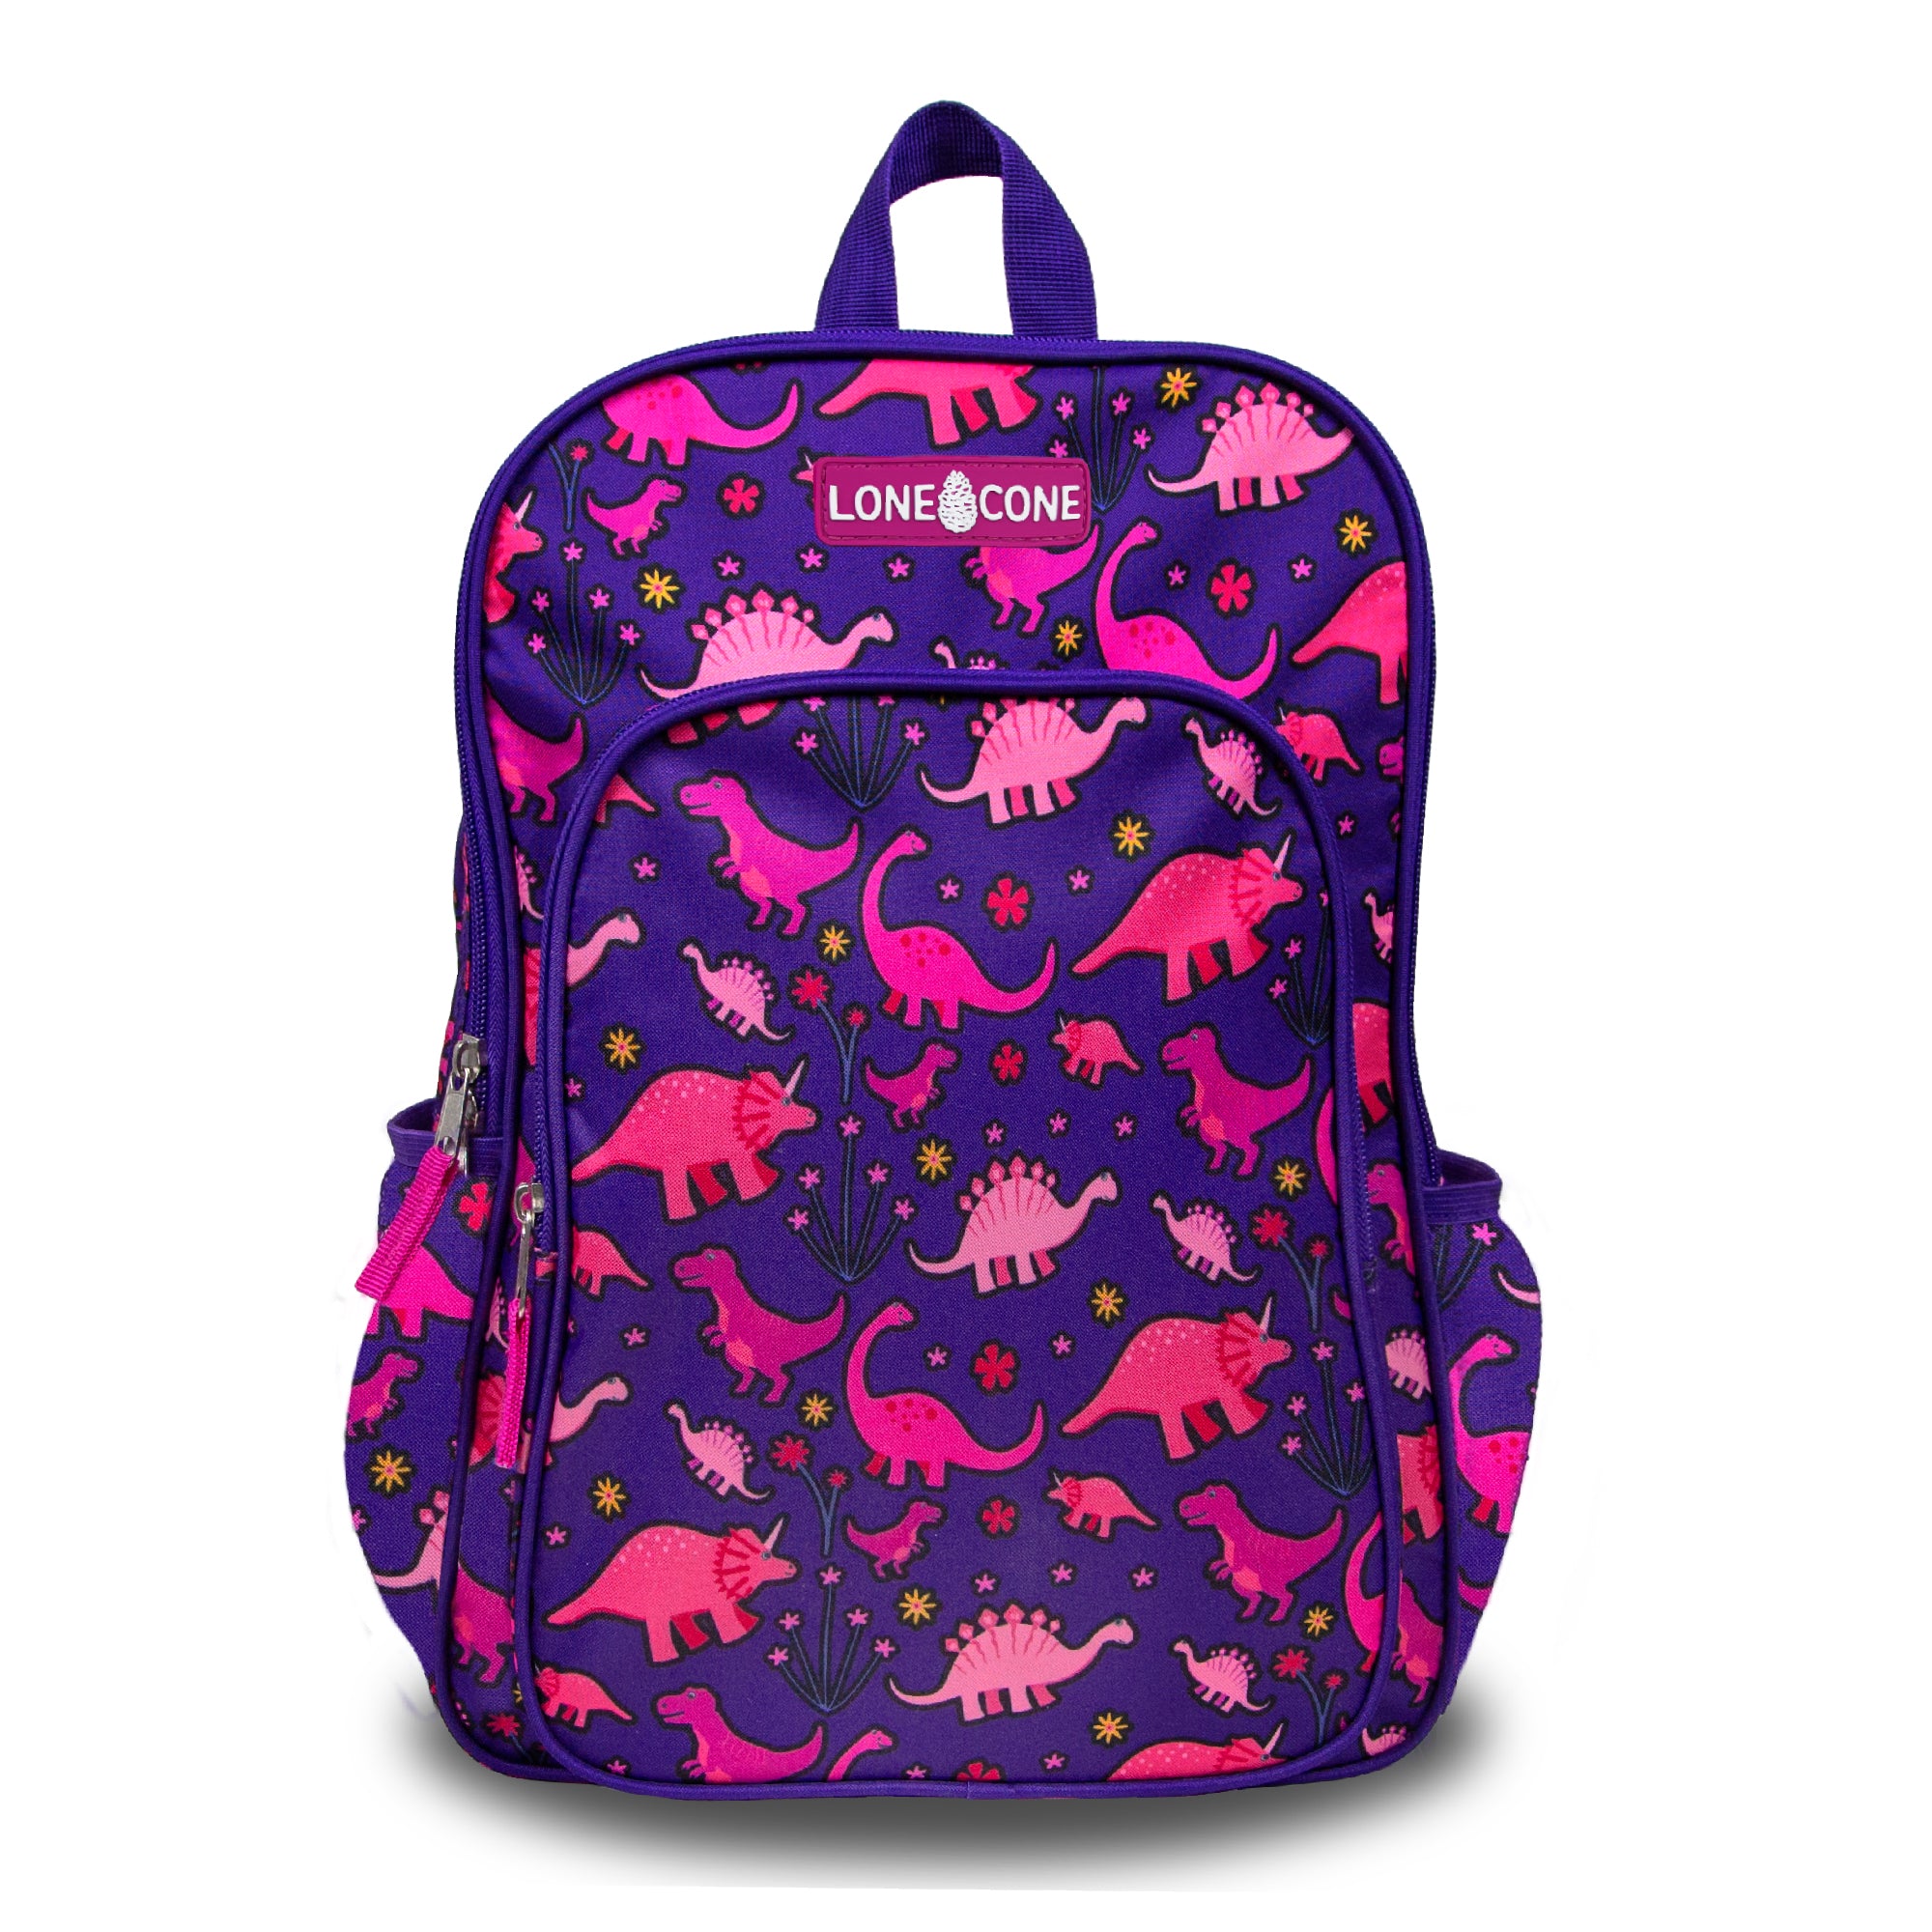 LONECONE Pink-osaurus Rex 15" Backpack